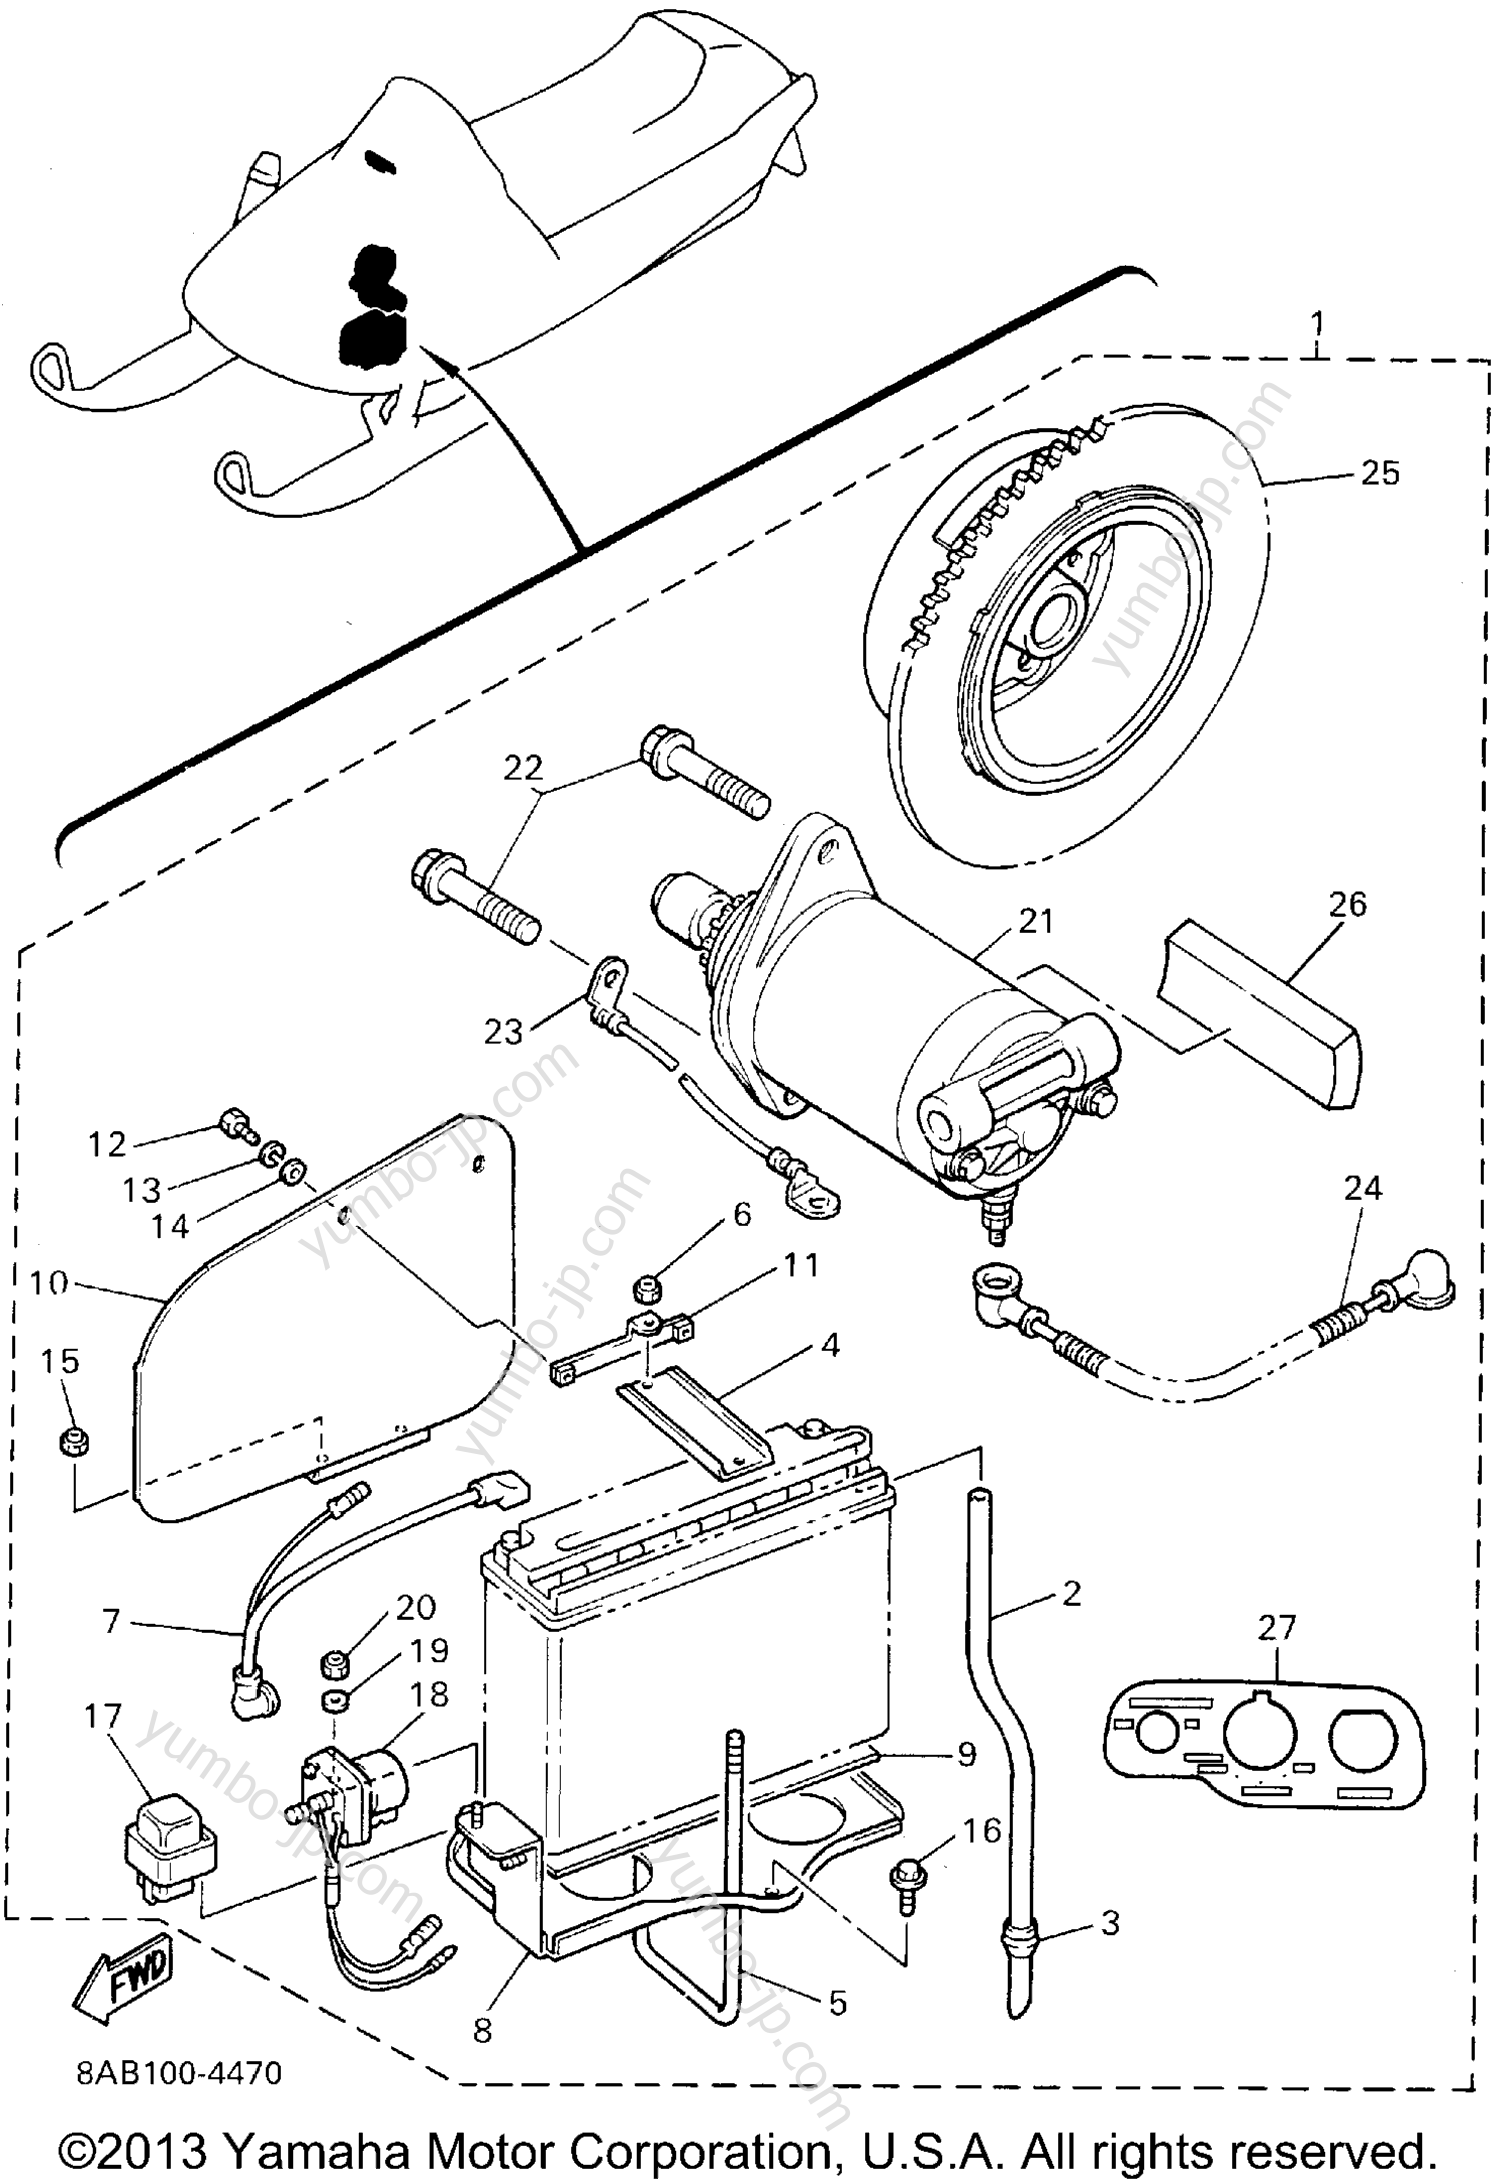 Electric Start Kit (Alternate) for snowmobiles YAMAHA VMAX 600 (VX600U) 1994 year